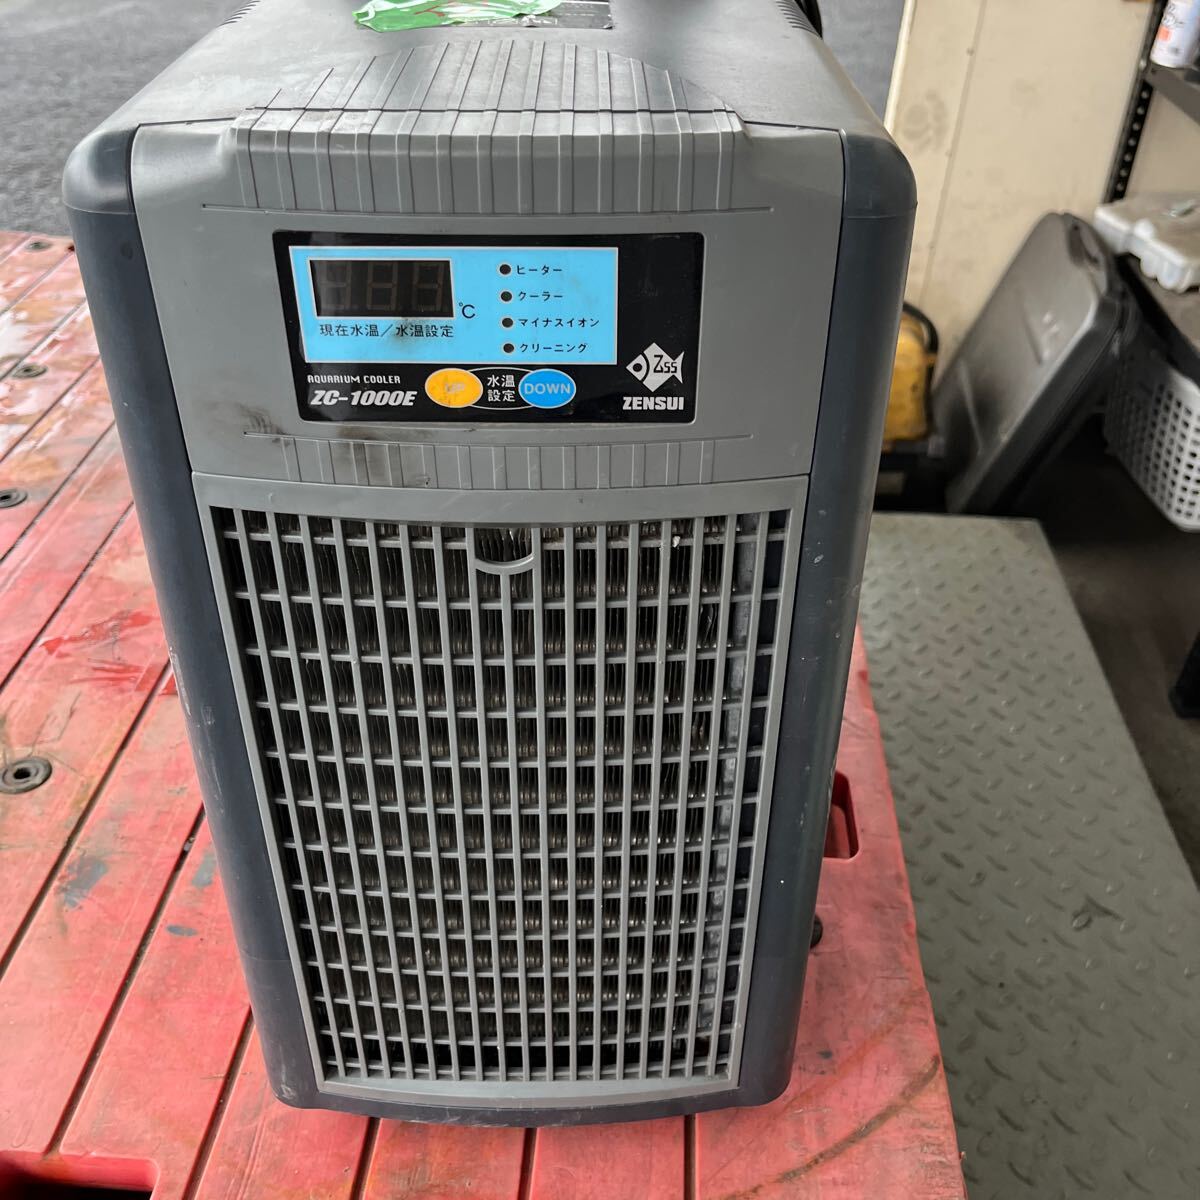 zen acid ZC-1000E aquarium cooler,air conditioner ZENSUI aquarium present condition goods electrification has confirmed 